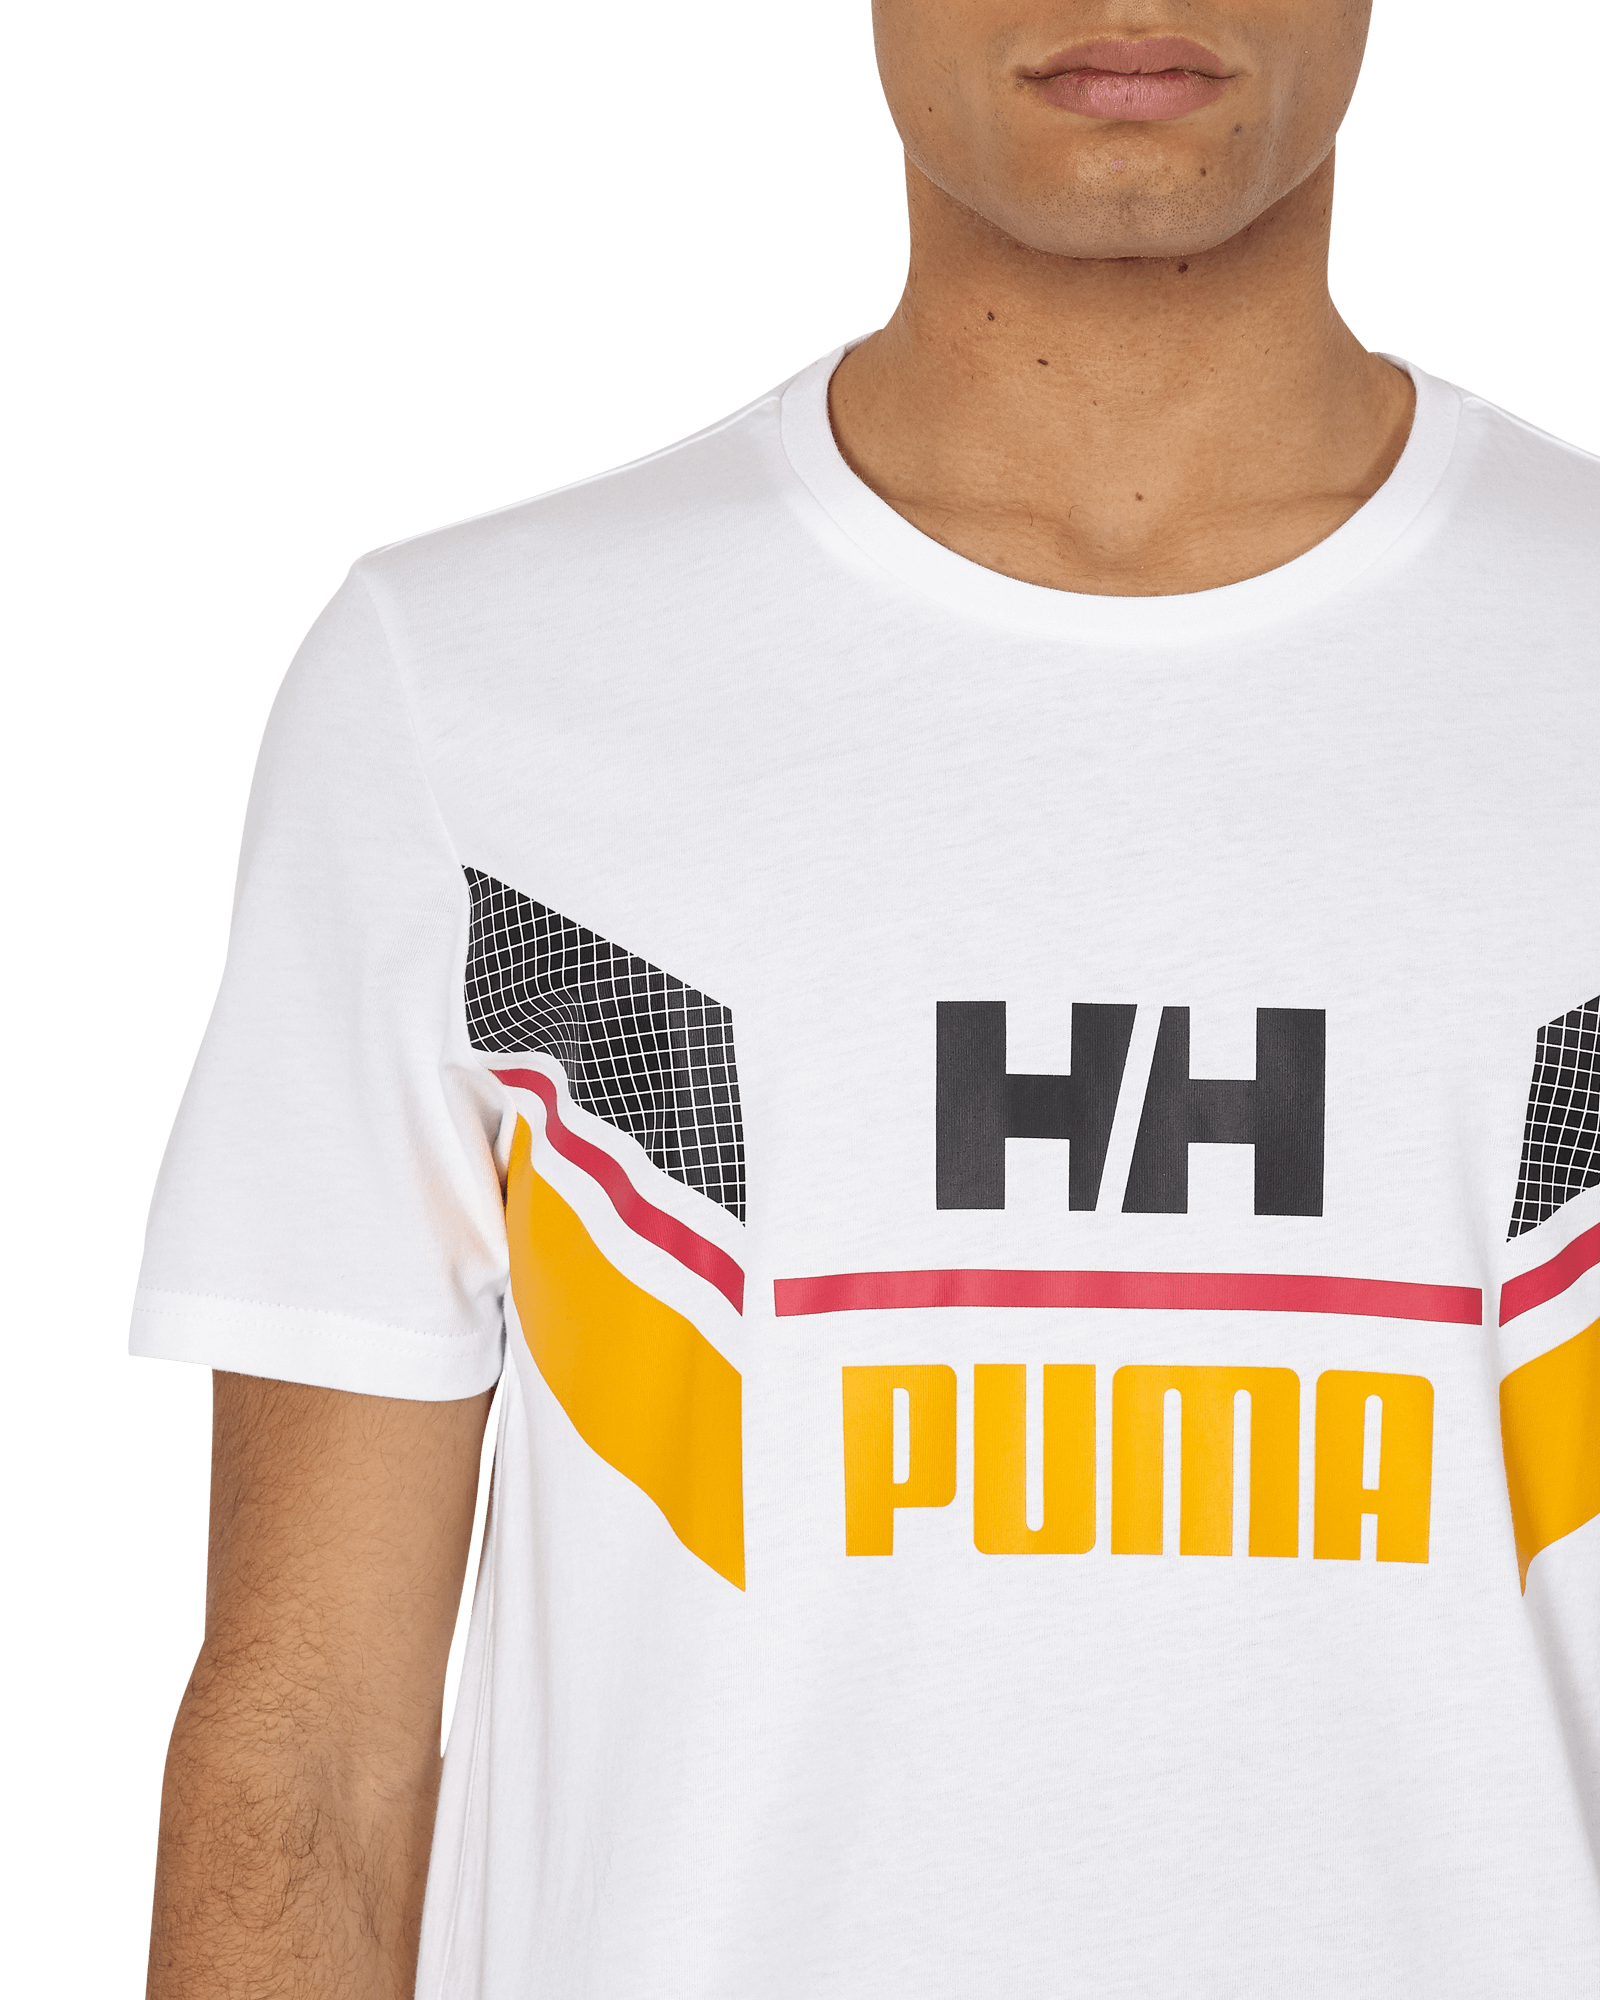 Puma Puma X Hh Puma White T-Shirts Shortsleeve 597147-02